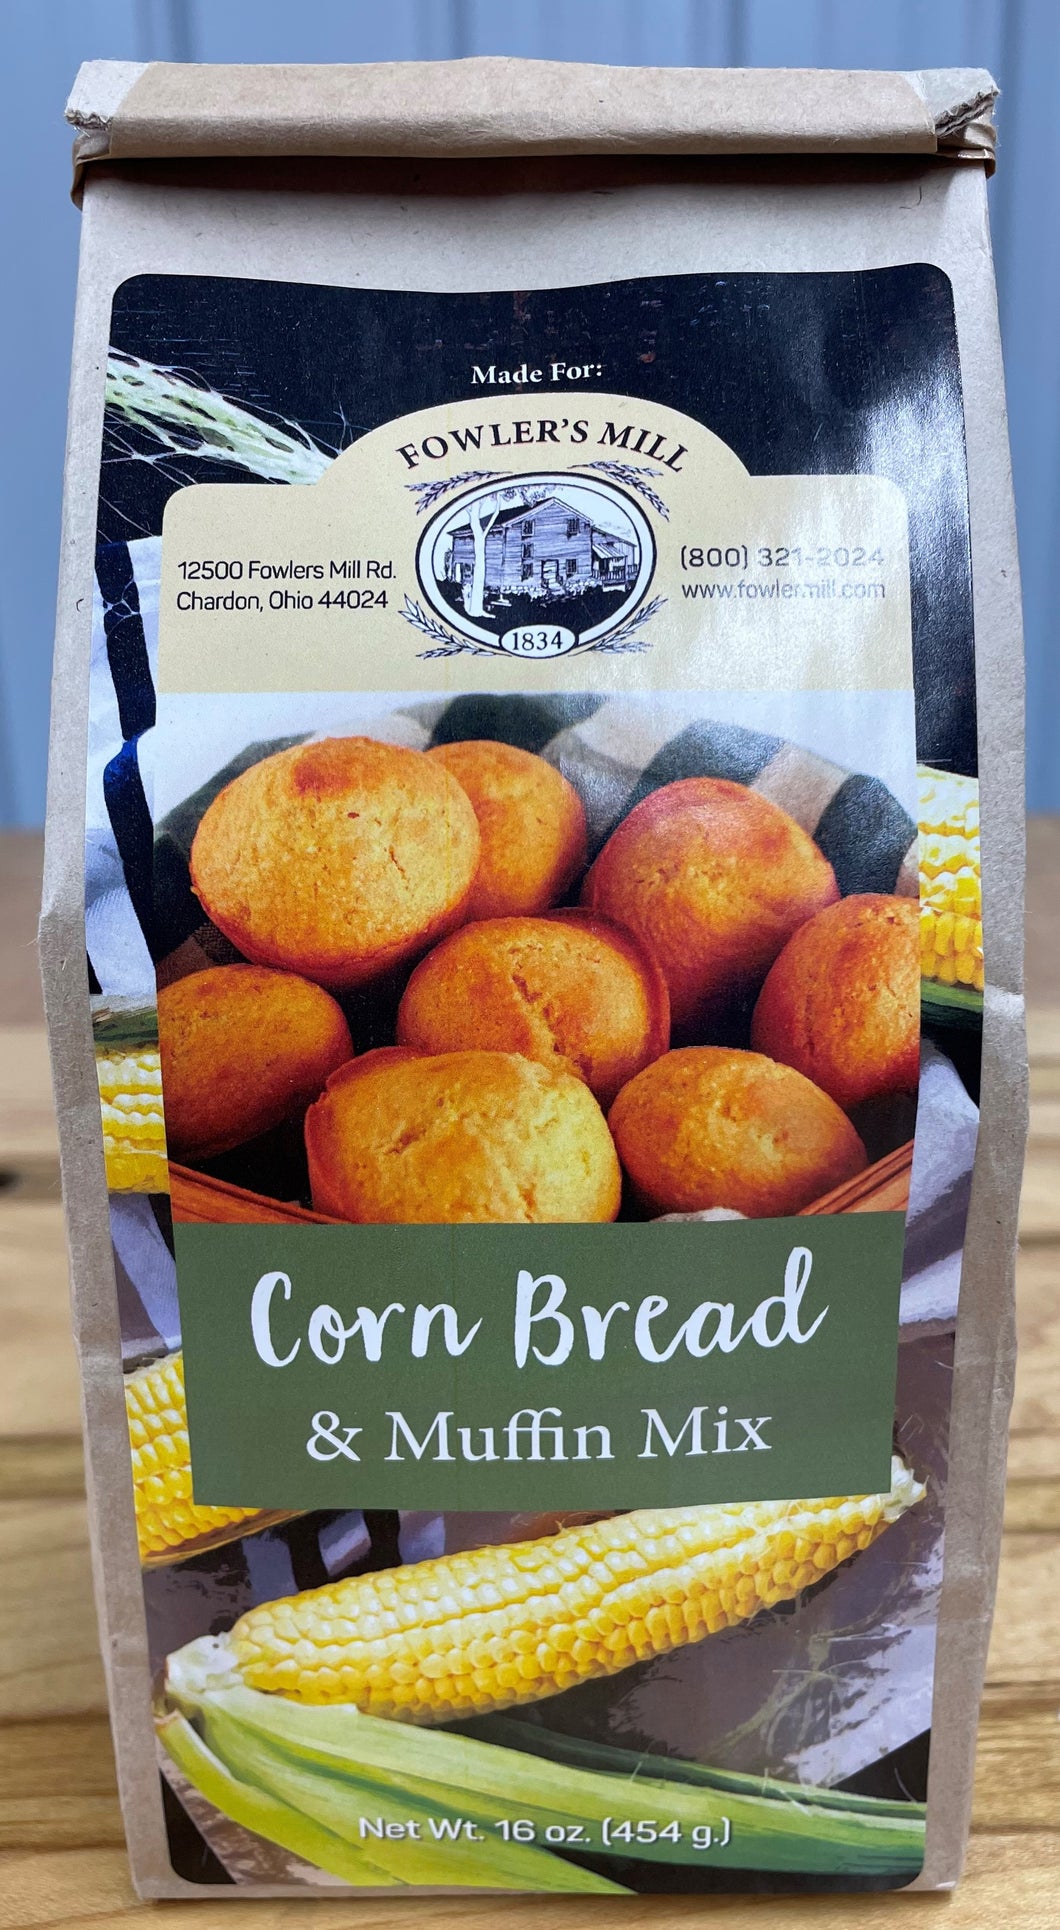 Fowler's Mill Corn Bread & Muffin Mix